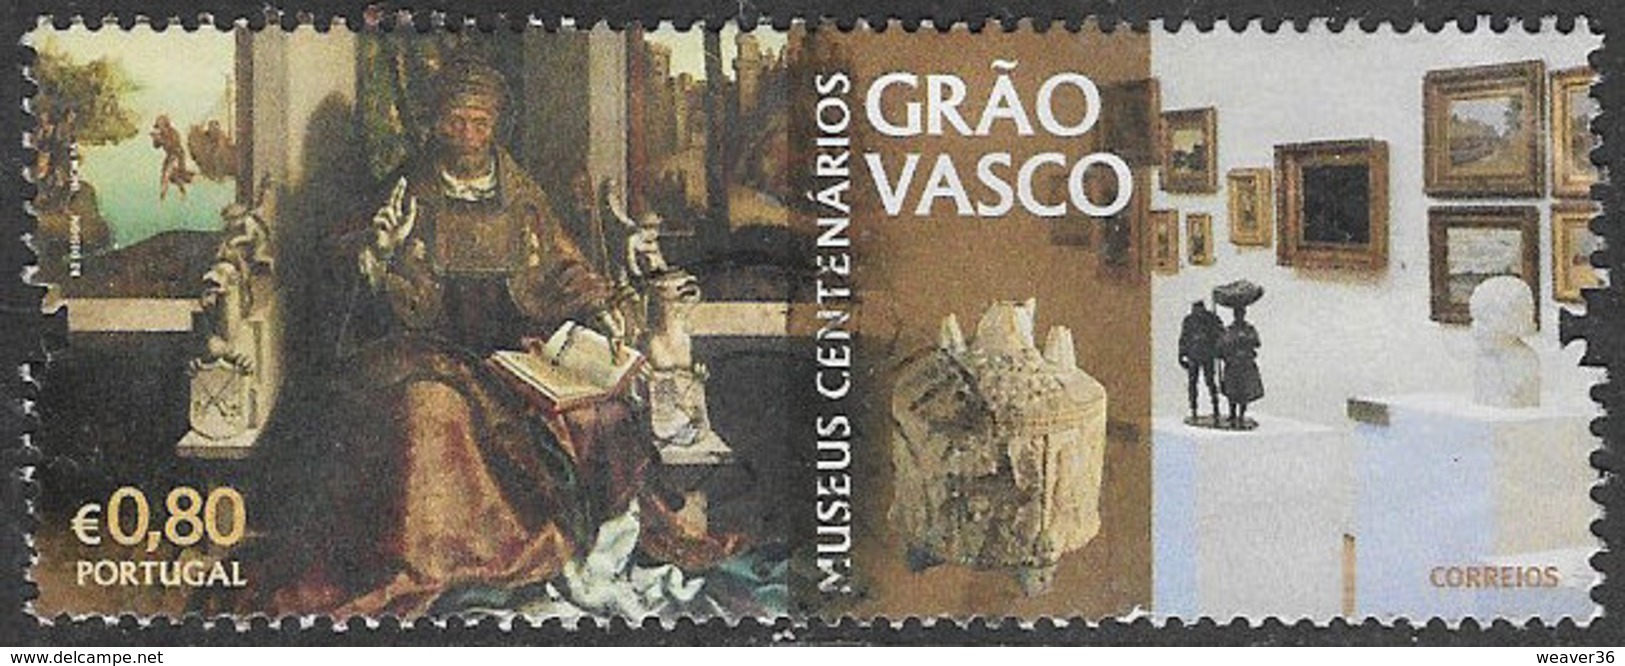 Portugal 2016 Grão Vasco Museum 80c Good/fine Used [38/31444/ND] - Used Stamps